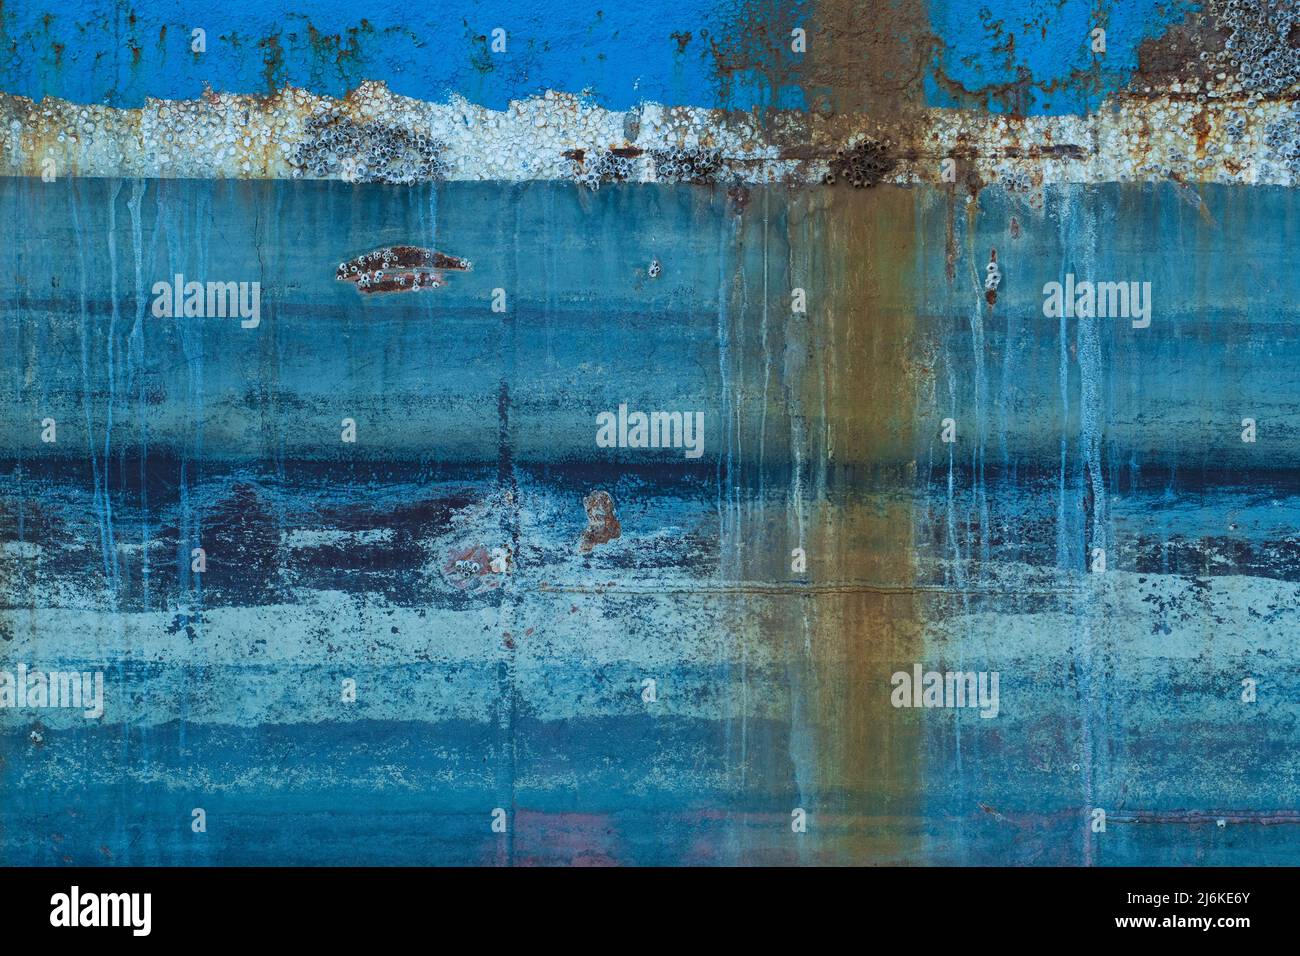 USA, South, Louisiana, Houma, Intercoastal Waterway, rusted ship deatil Stock Photo